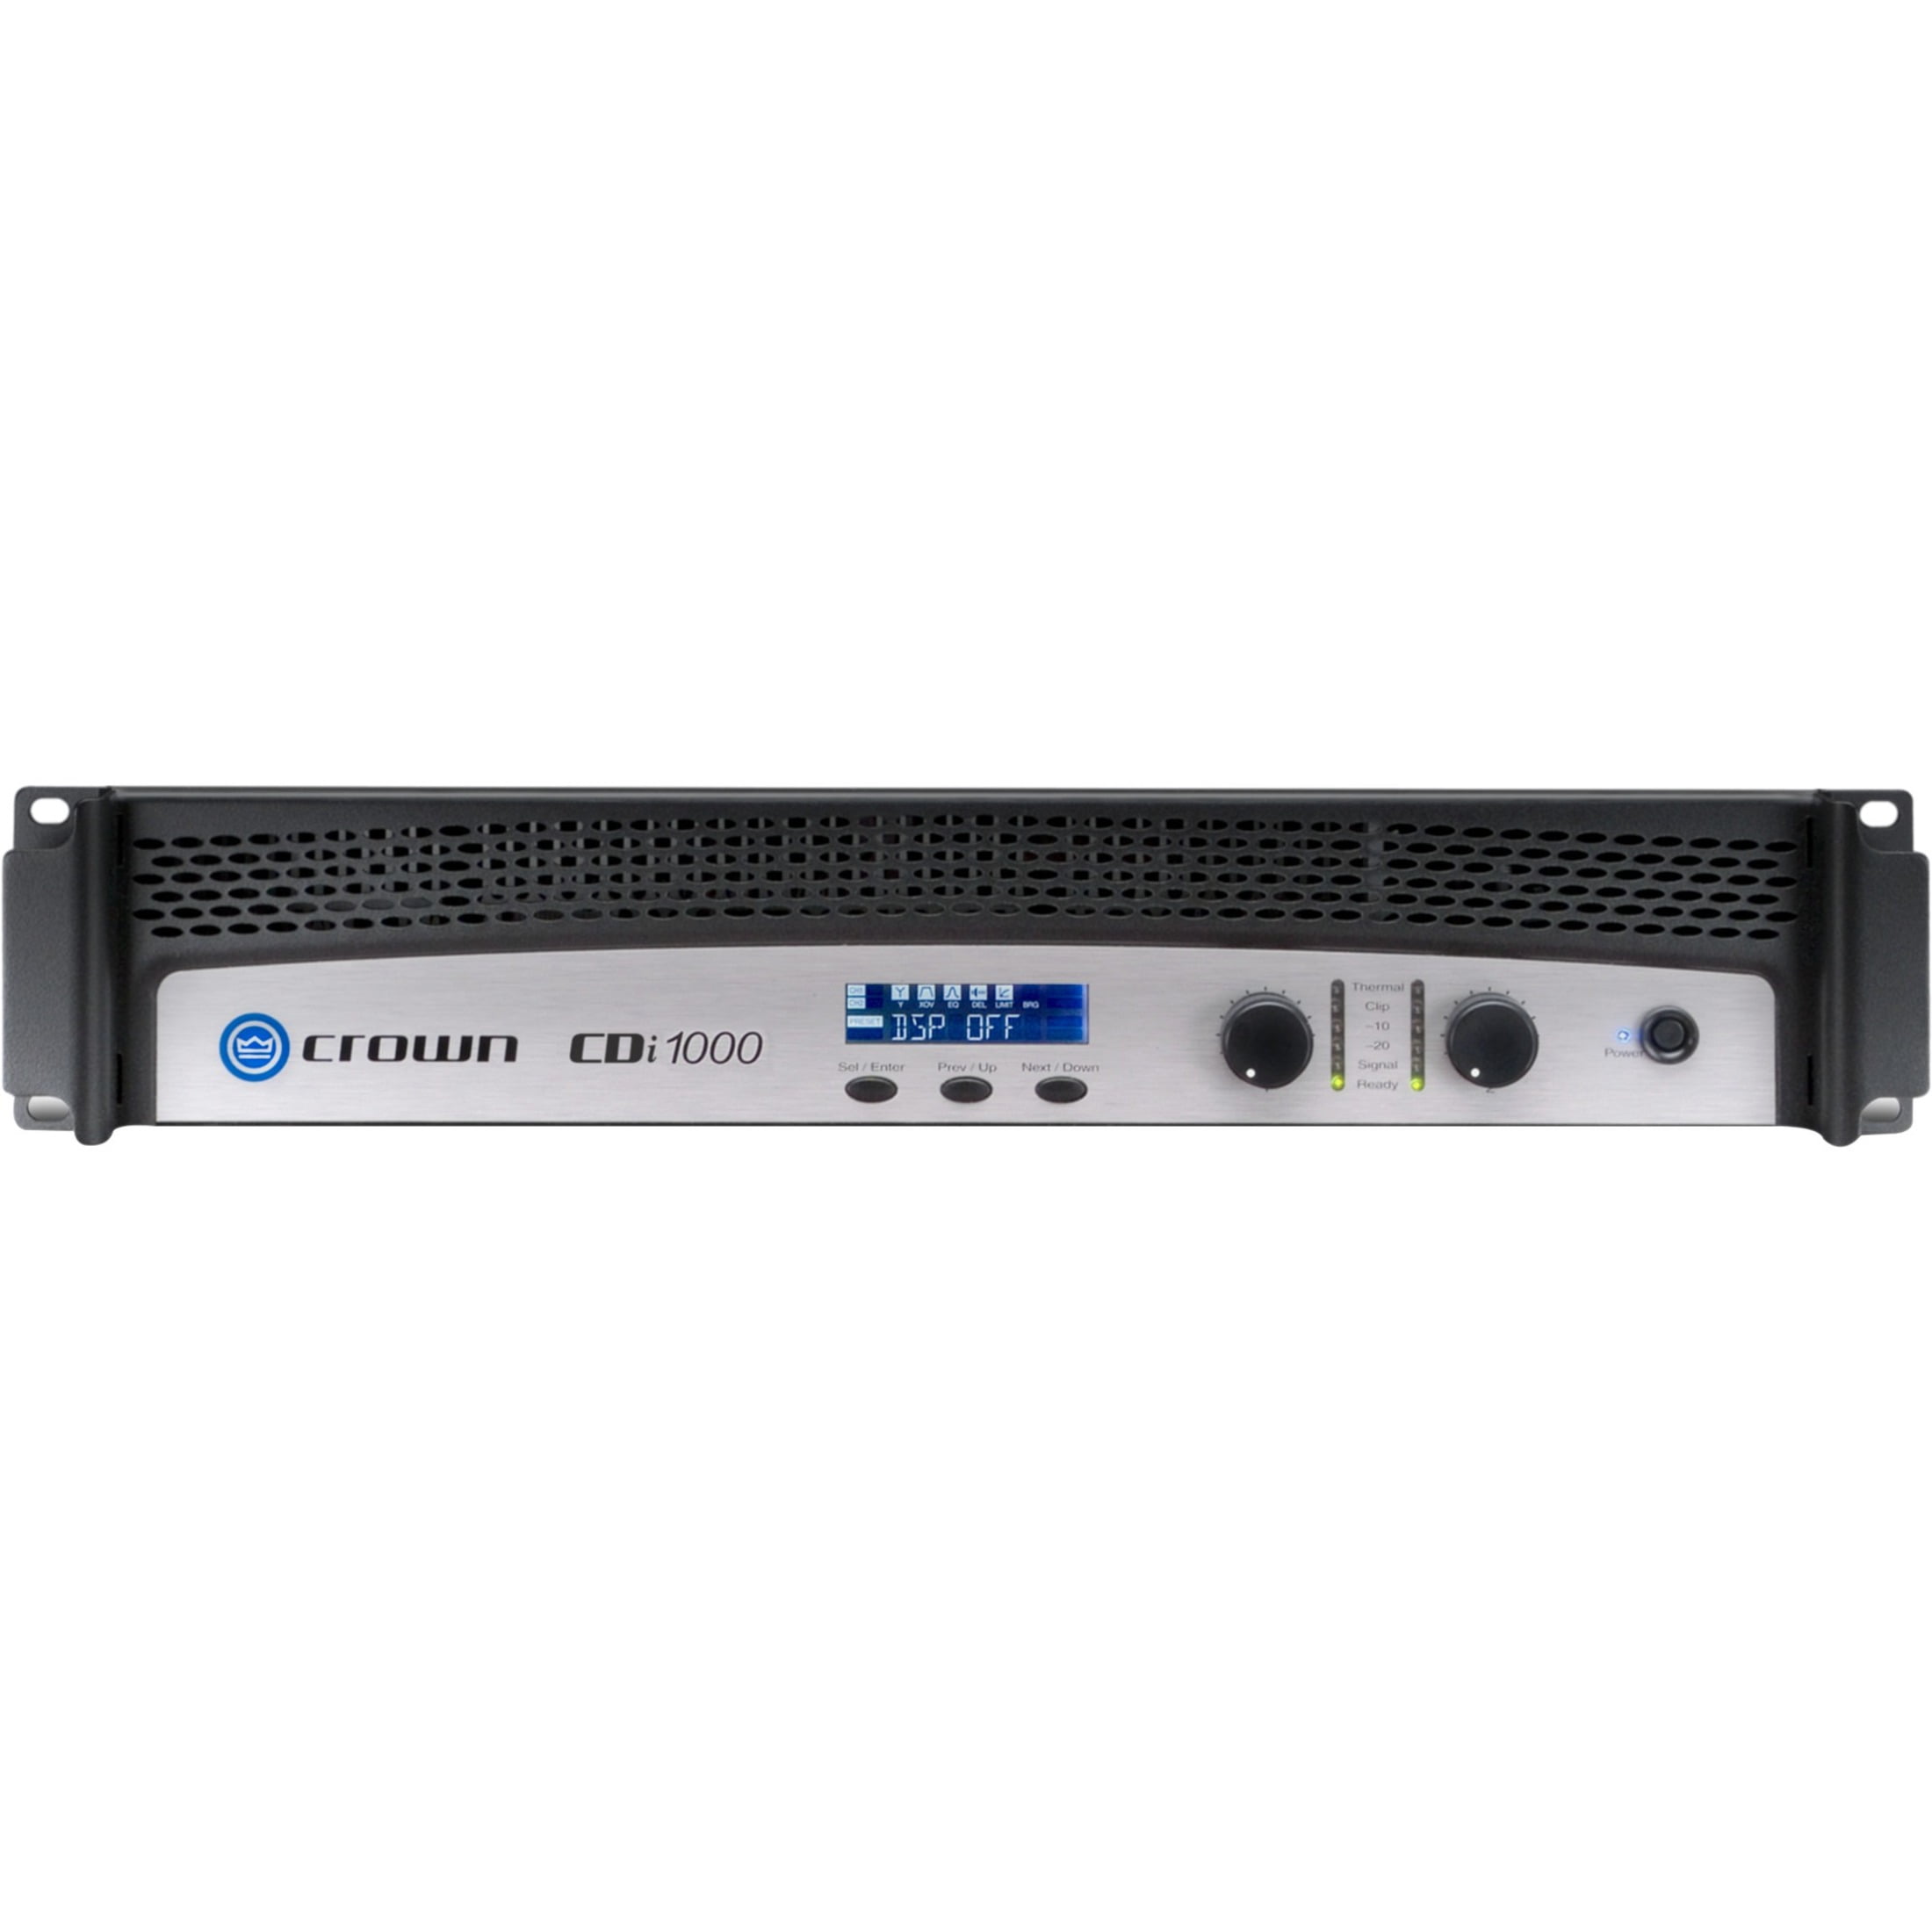 TDA7498E 2 Channel Stereo Audio Amplifier Receiver, Ansten 2.0CH